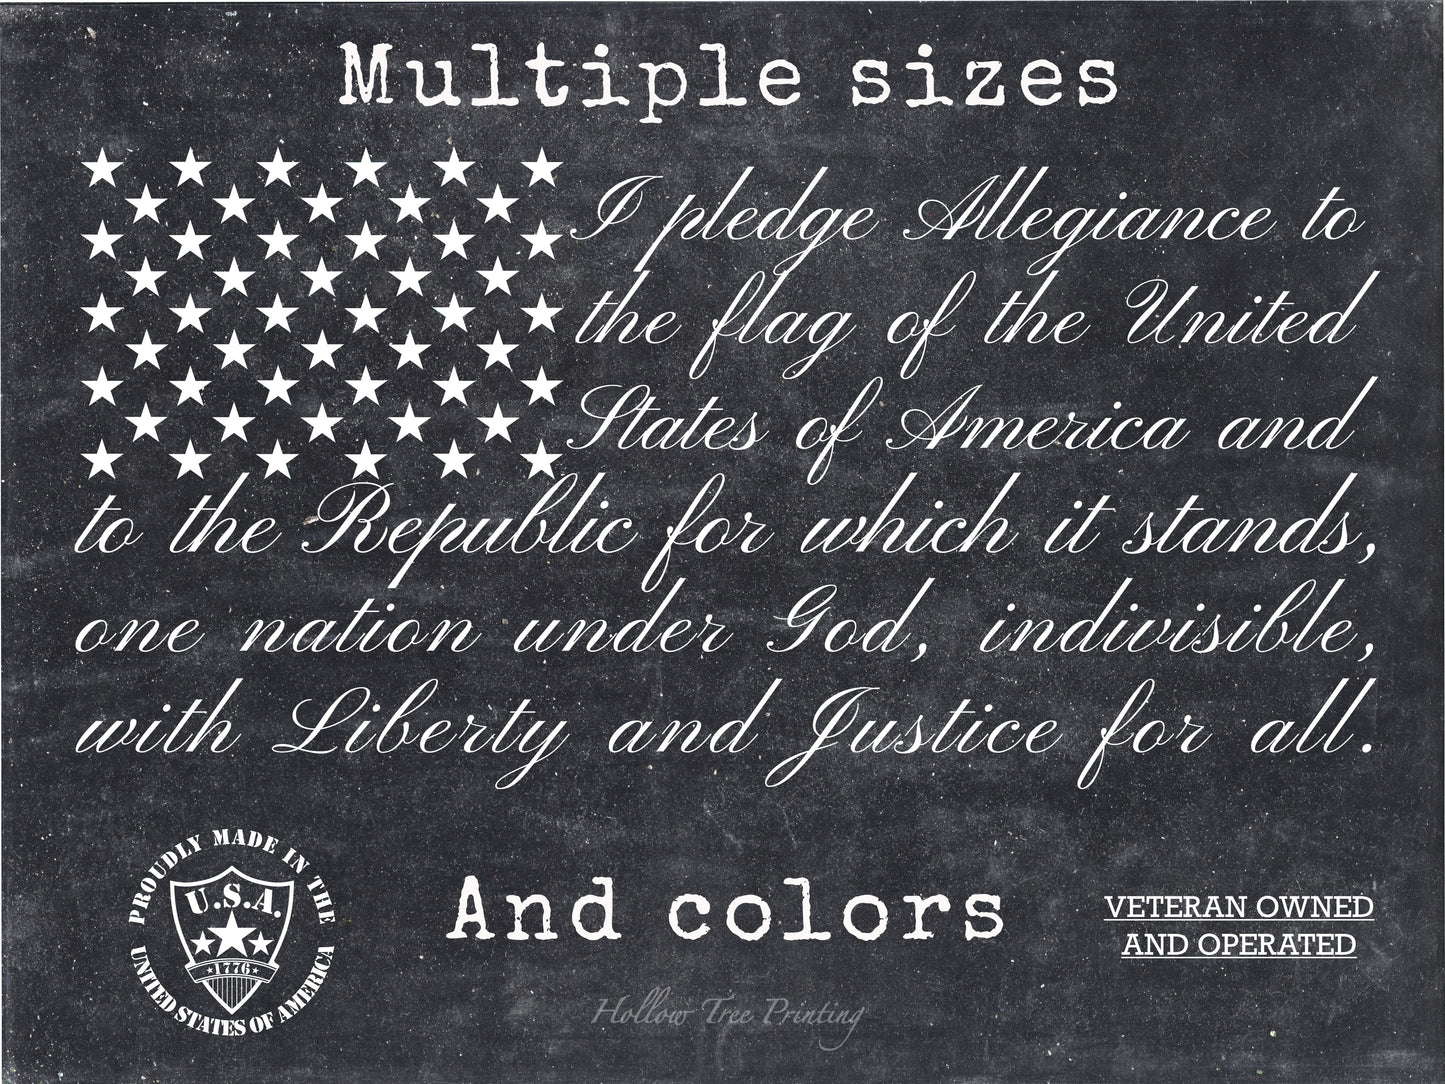 Pledge of Allegiance American Flag Decal